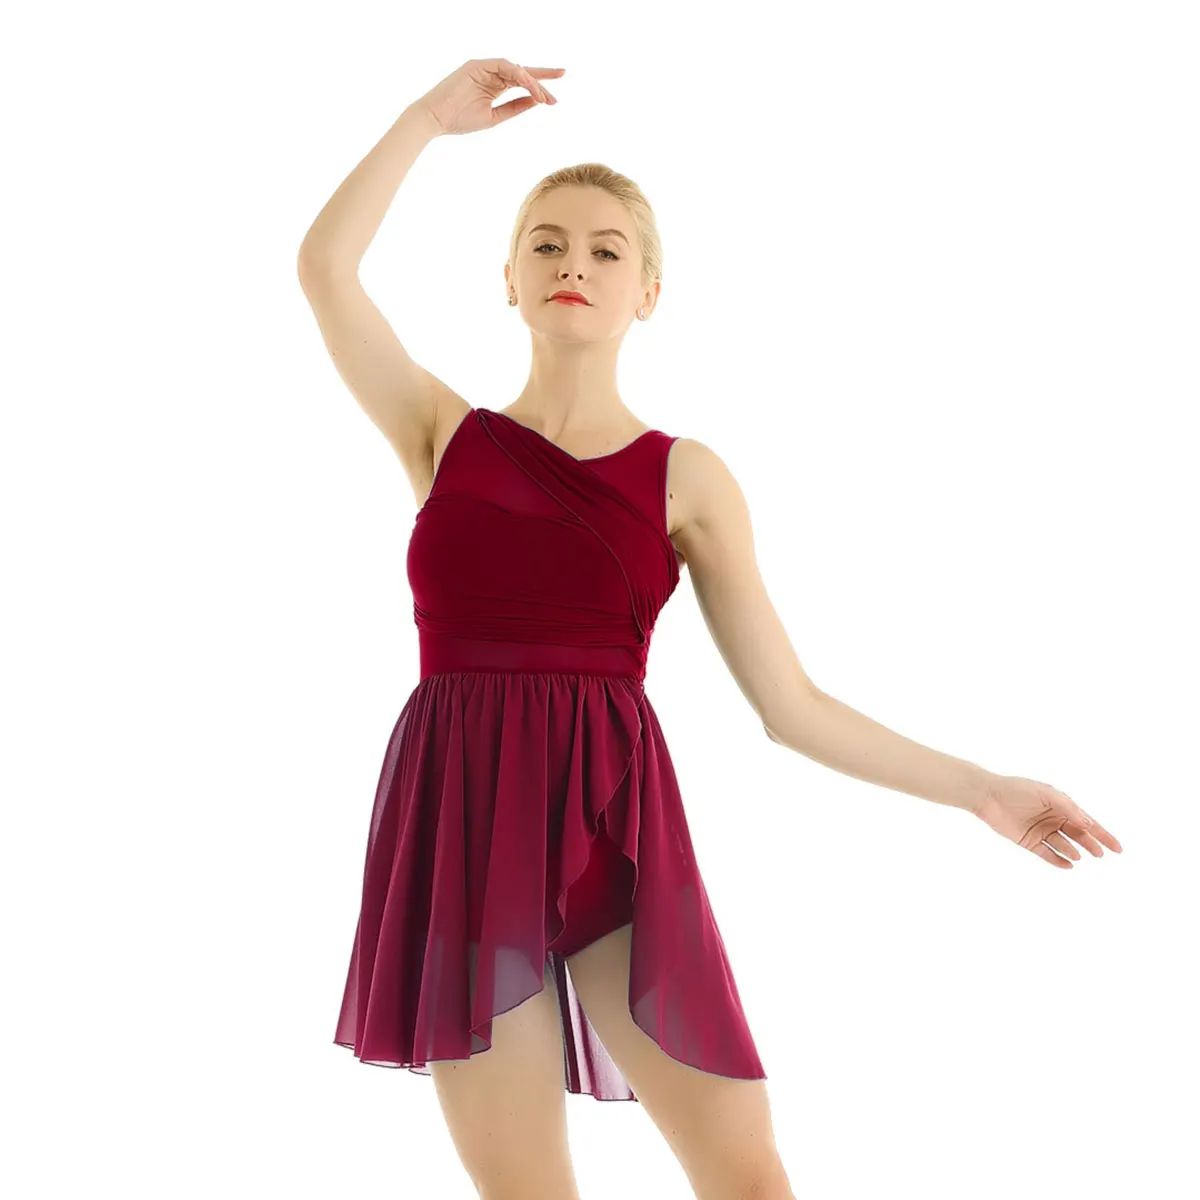 

Womens Adult Tutu Dance Dress Sleeveless Cut Out Asymmetric Chiffon Stretchy Ballet Dance Gymnastics Leotard Dress